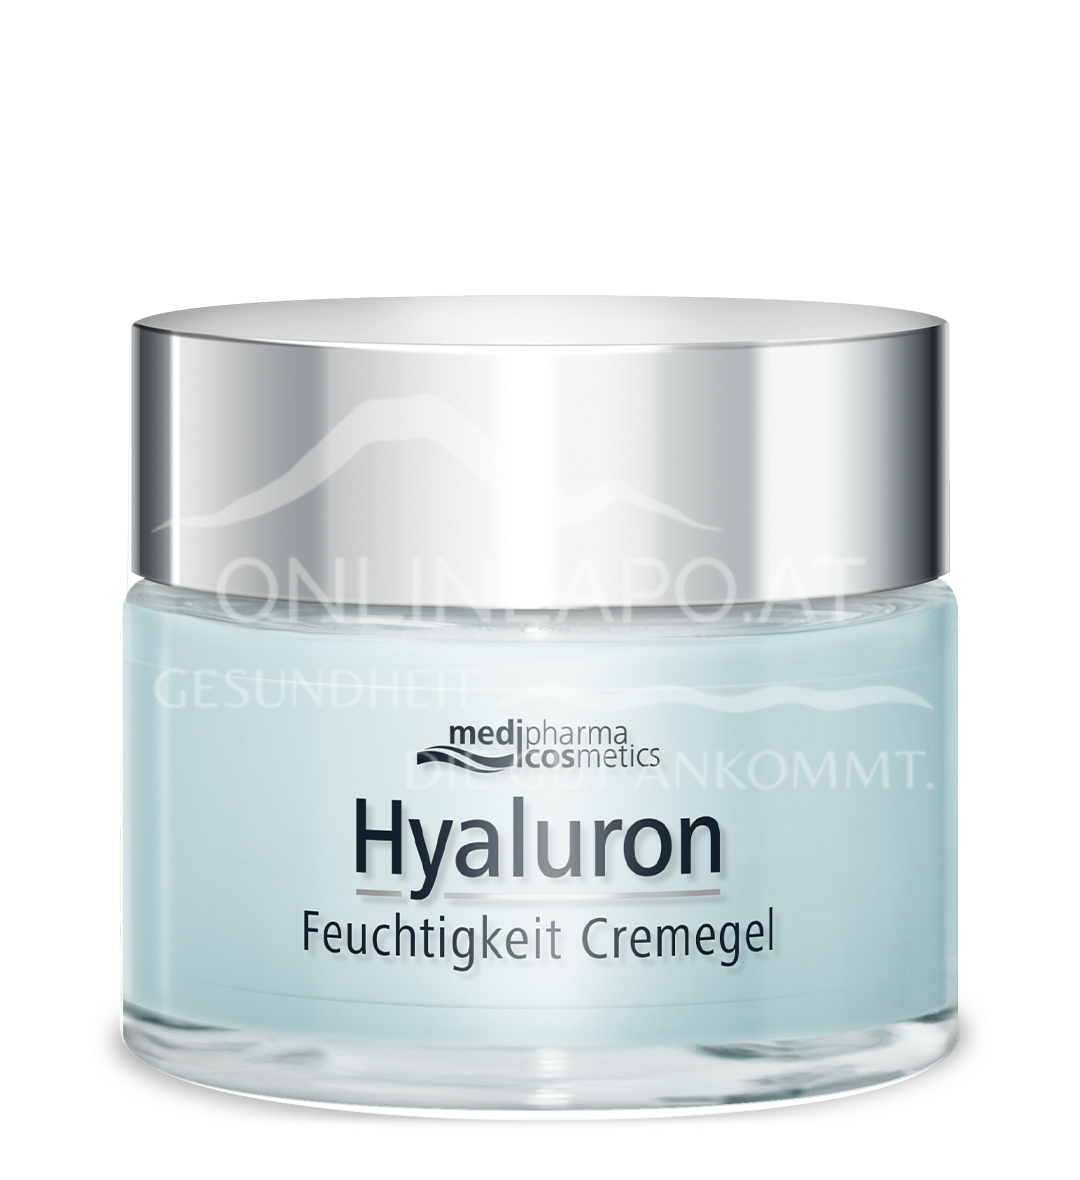 medipharma cosmetics Hyaluron 48h Feuchtigkeit Cremegel